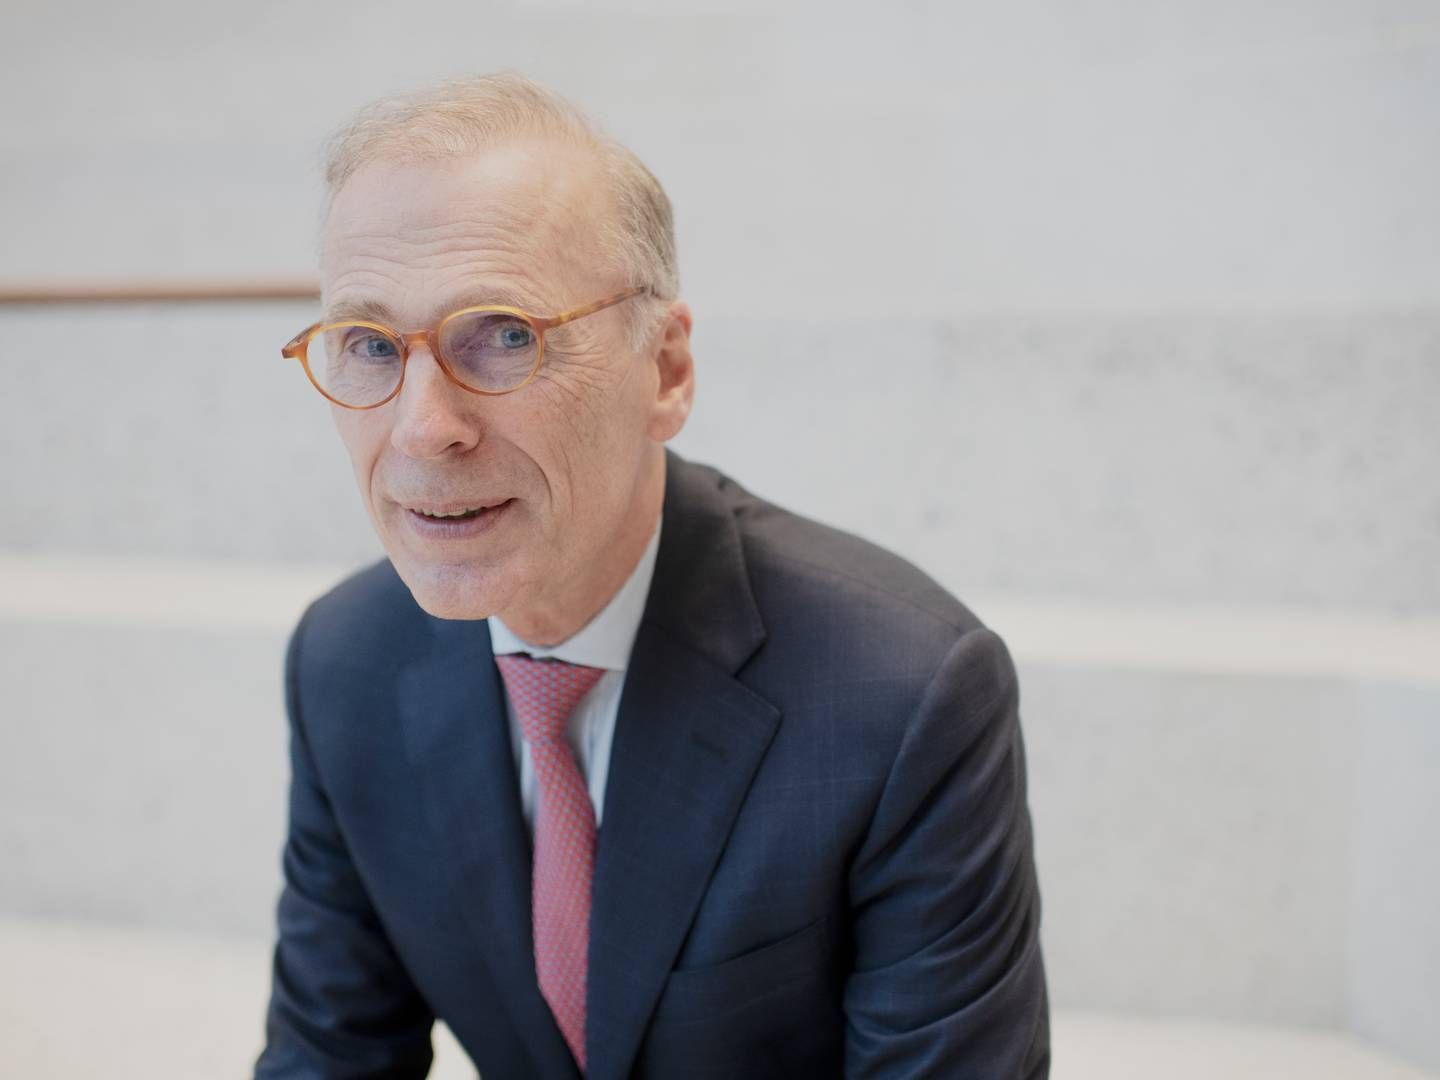 Cees ‘t Hart stopper som adm. direktør i Calsberg senest til oktober. | Foto: Liv Møller Kastrup